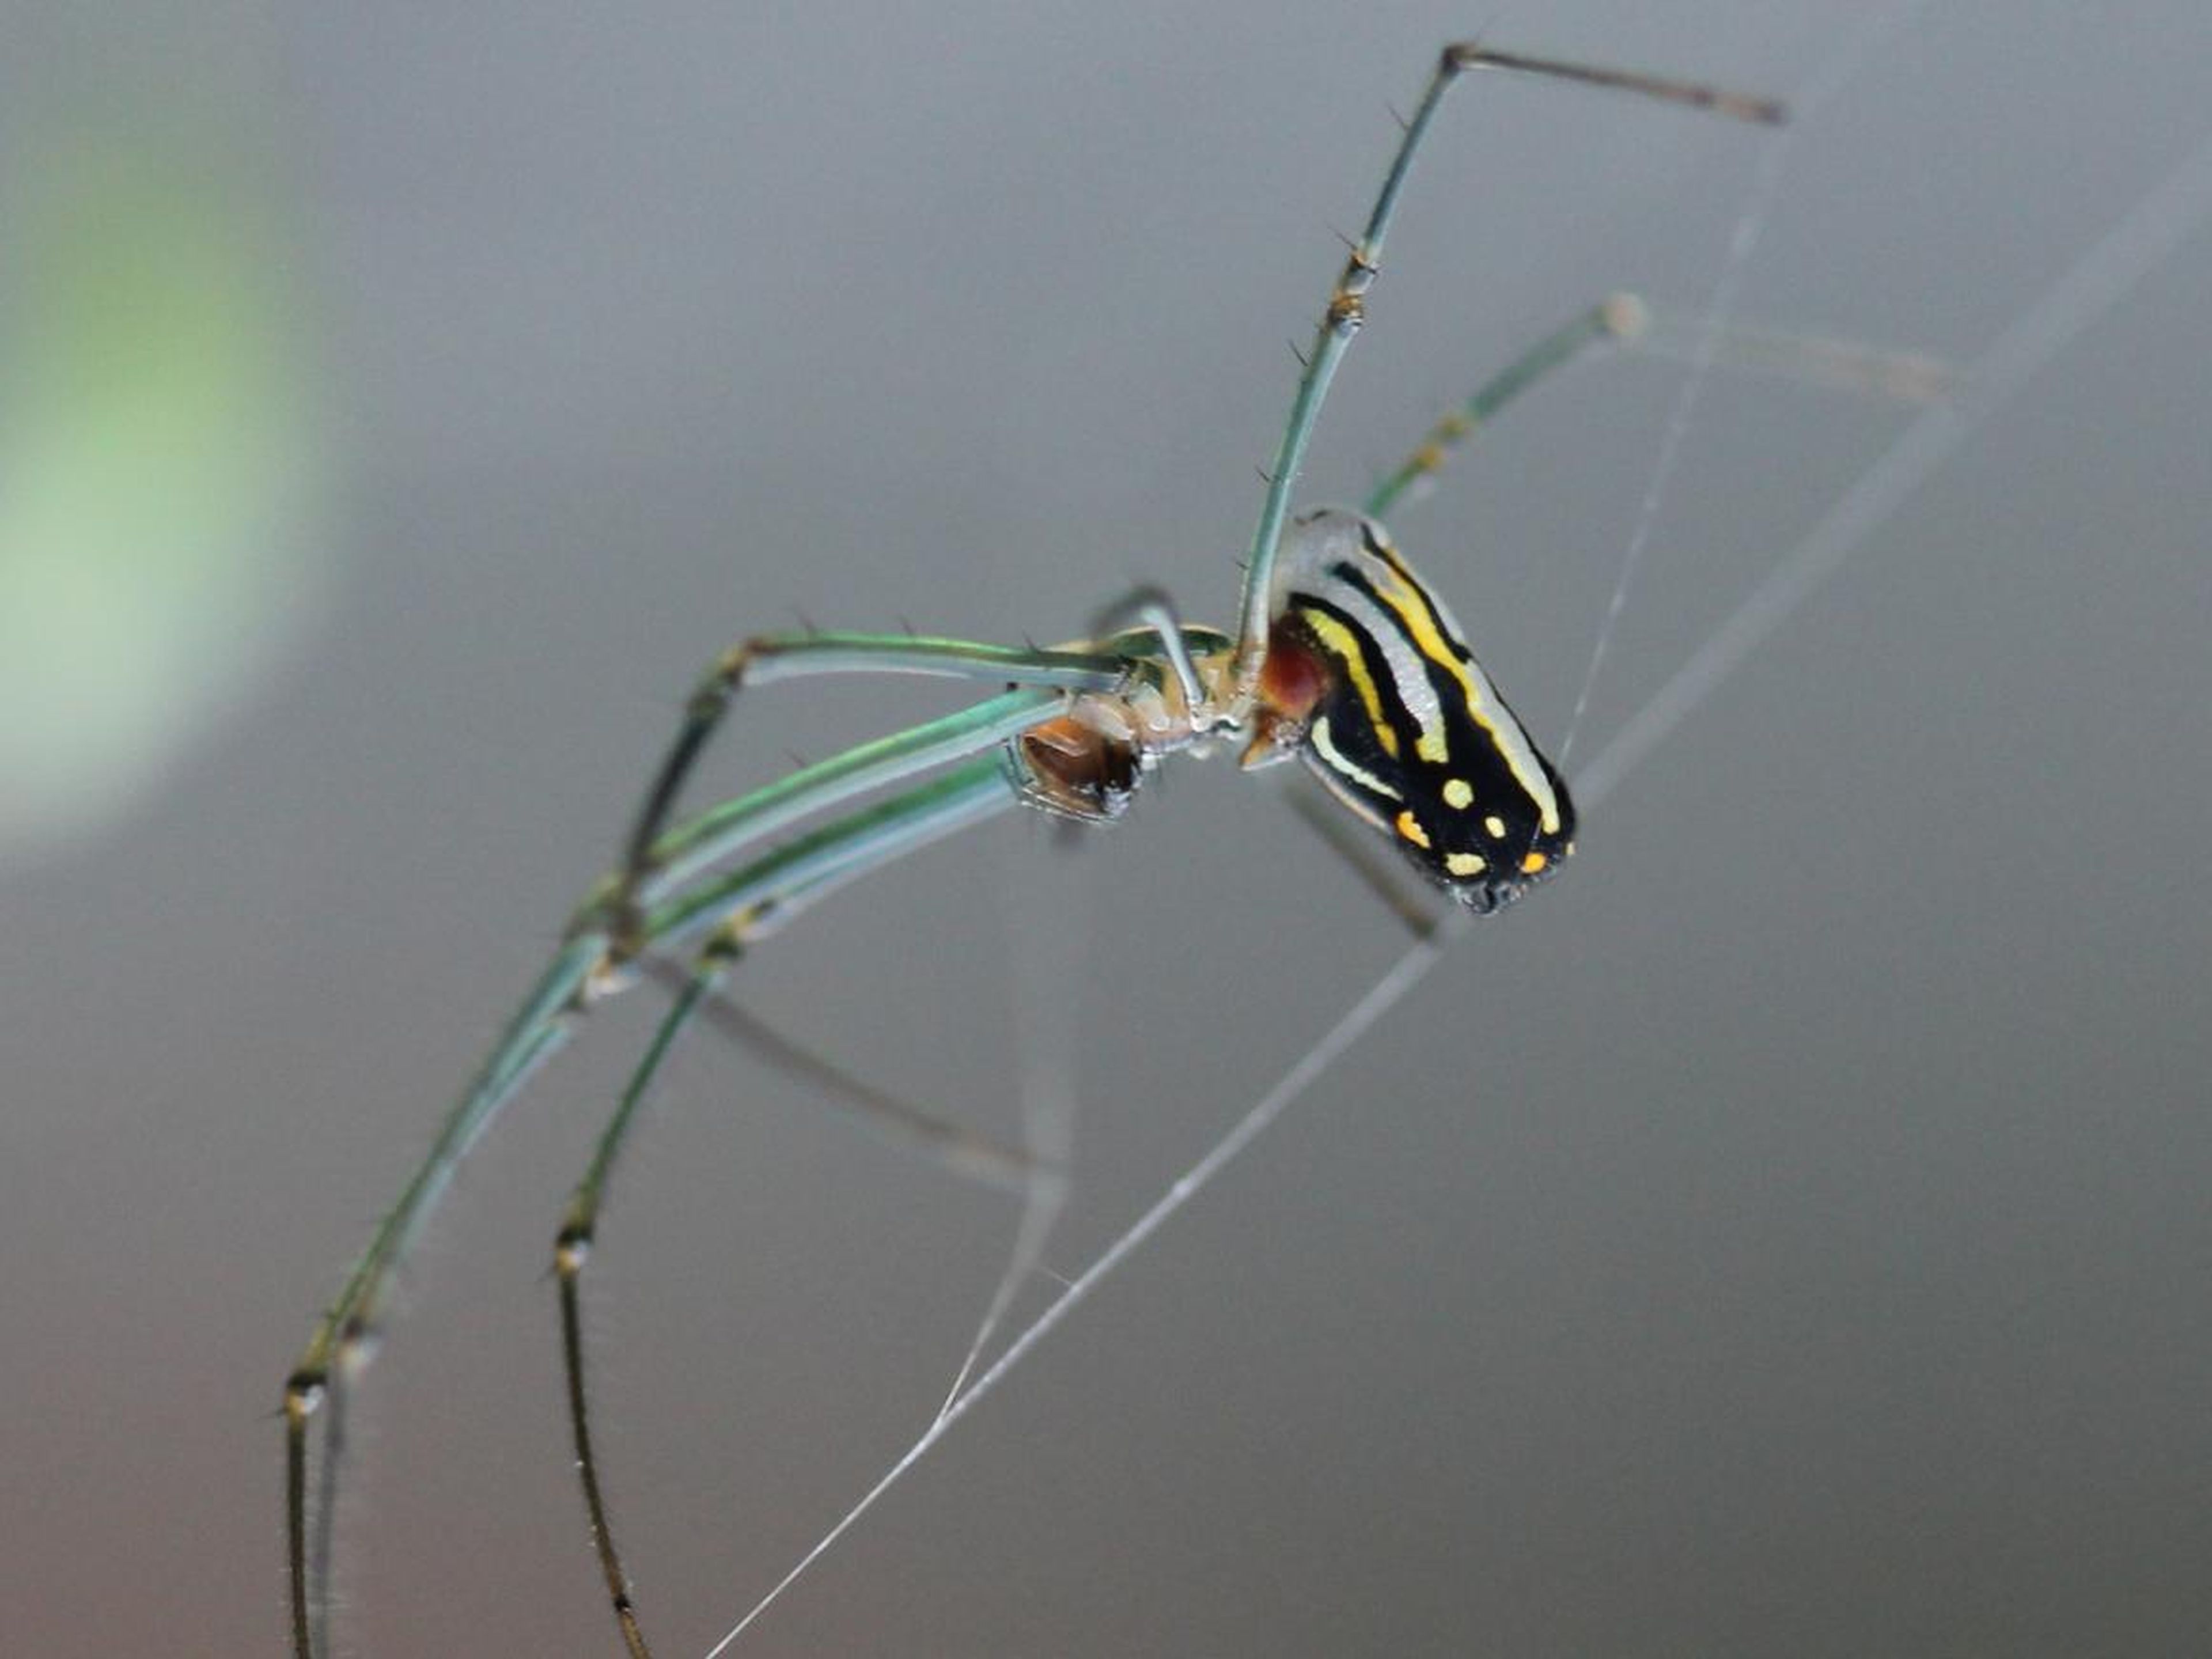 An adult female Leucauge argyra spider.